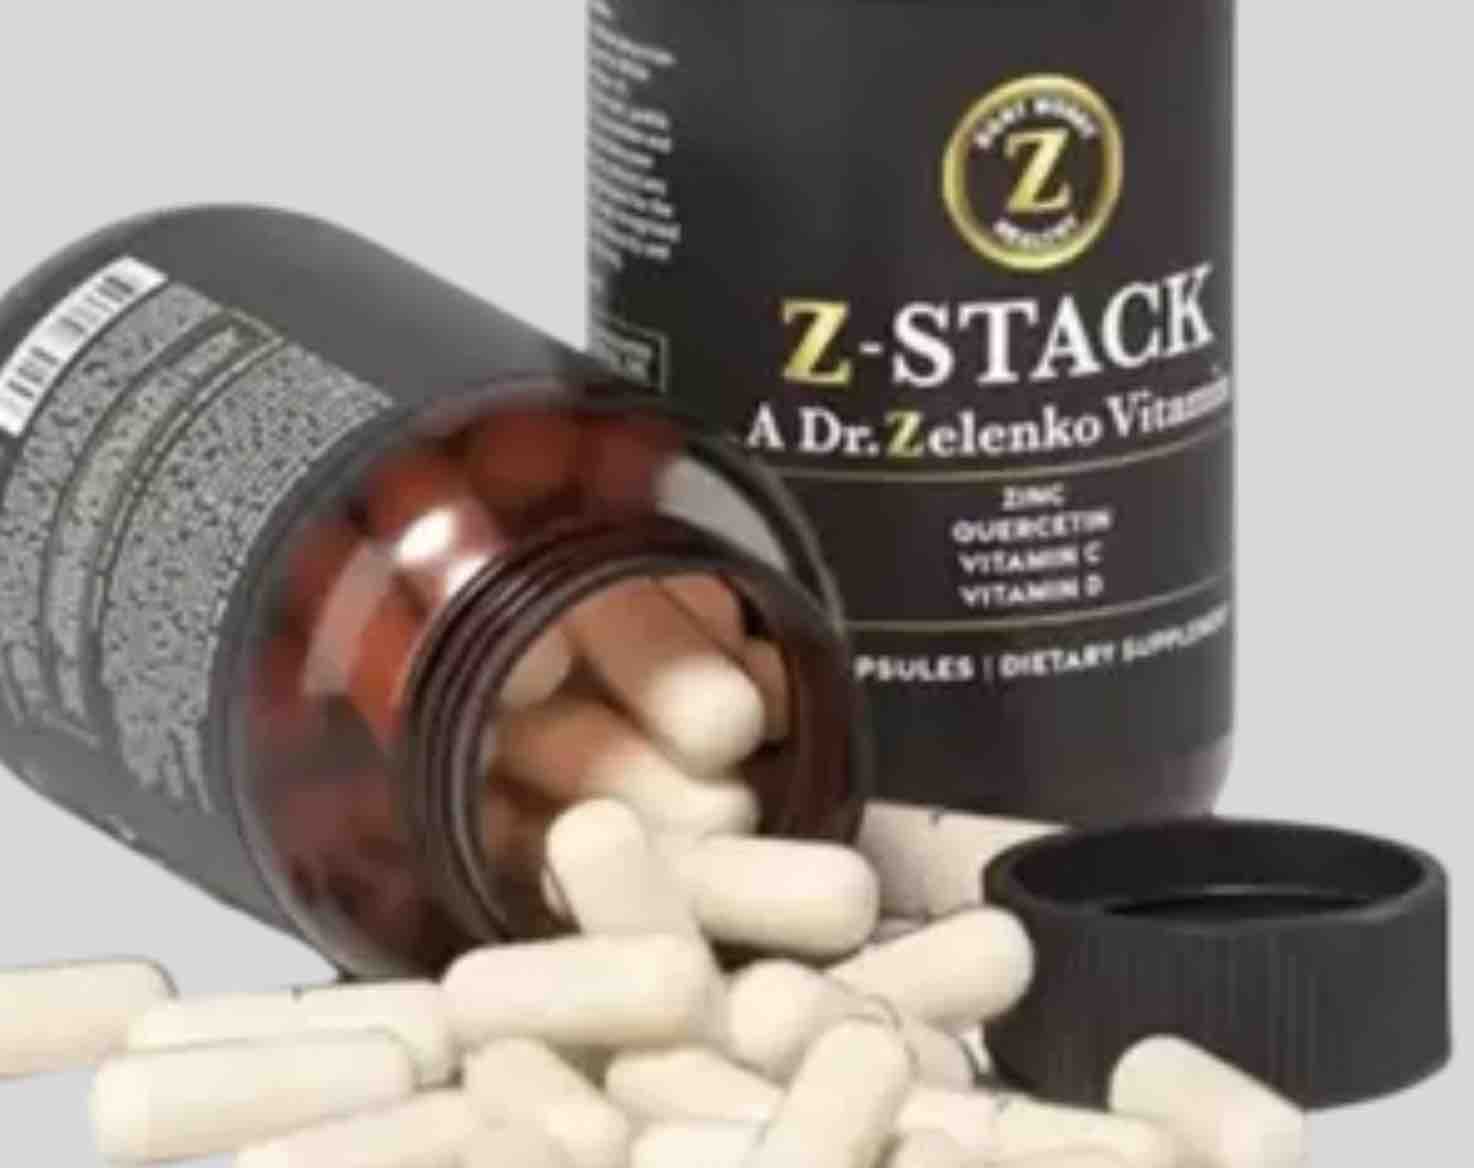 la-formule-z-stack-du-dr-vladimir-zelenko-zinc-quercetine-c-et-d.jpg